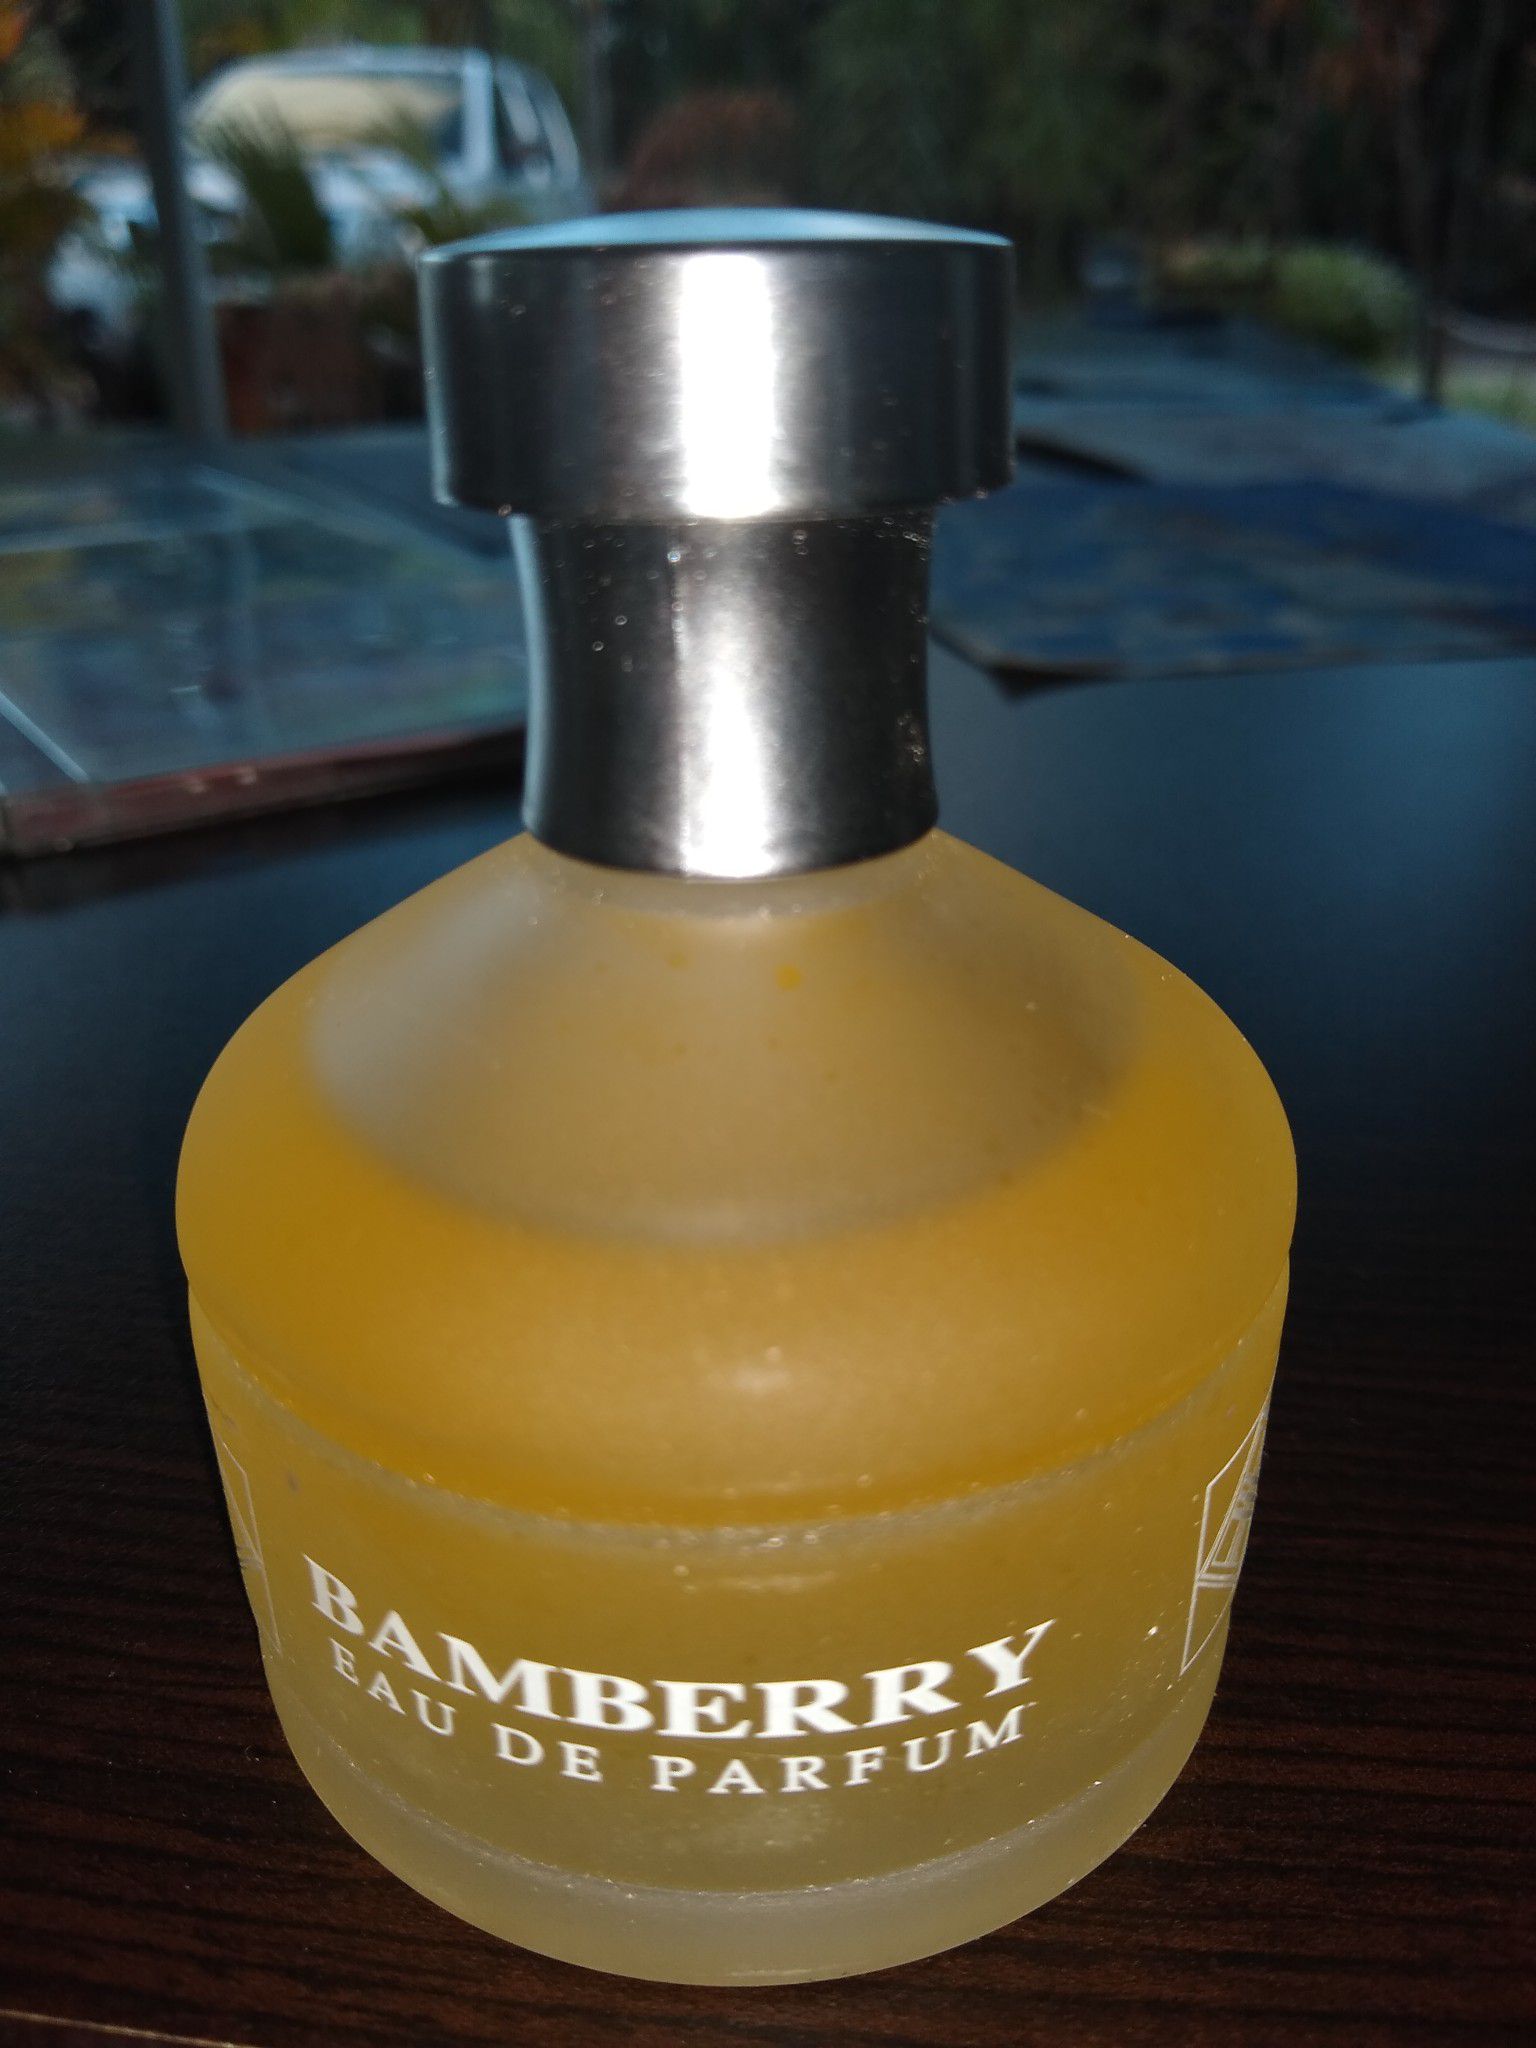 New Burberry Perfume